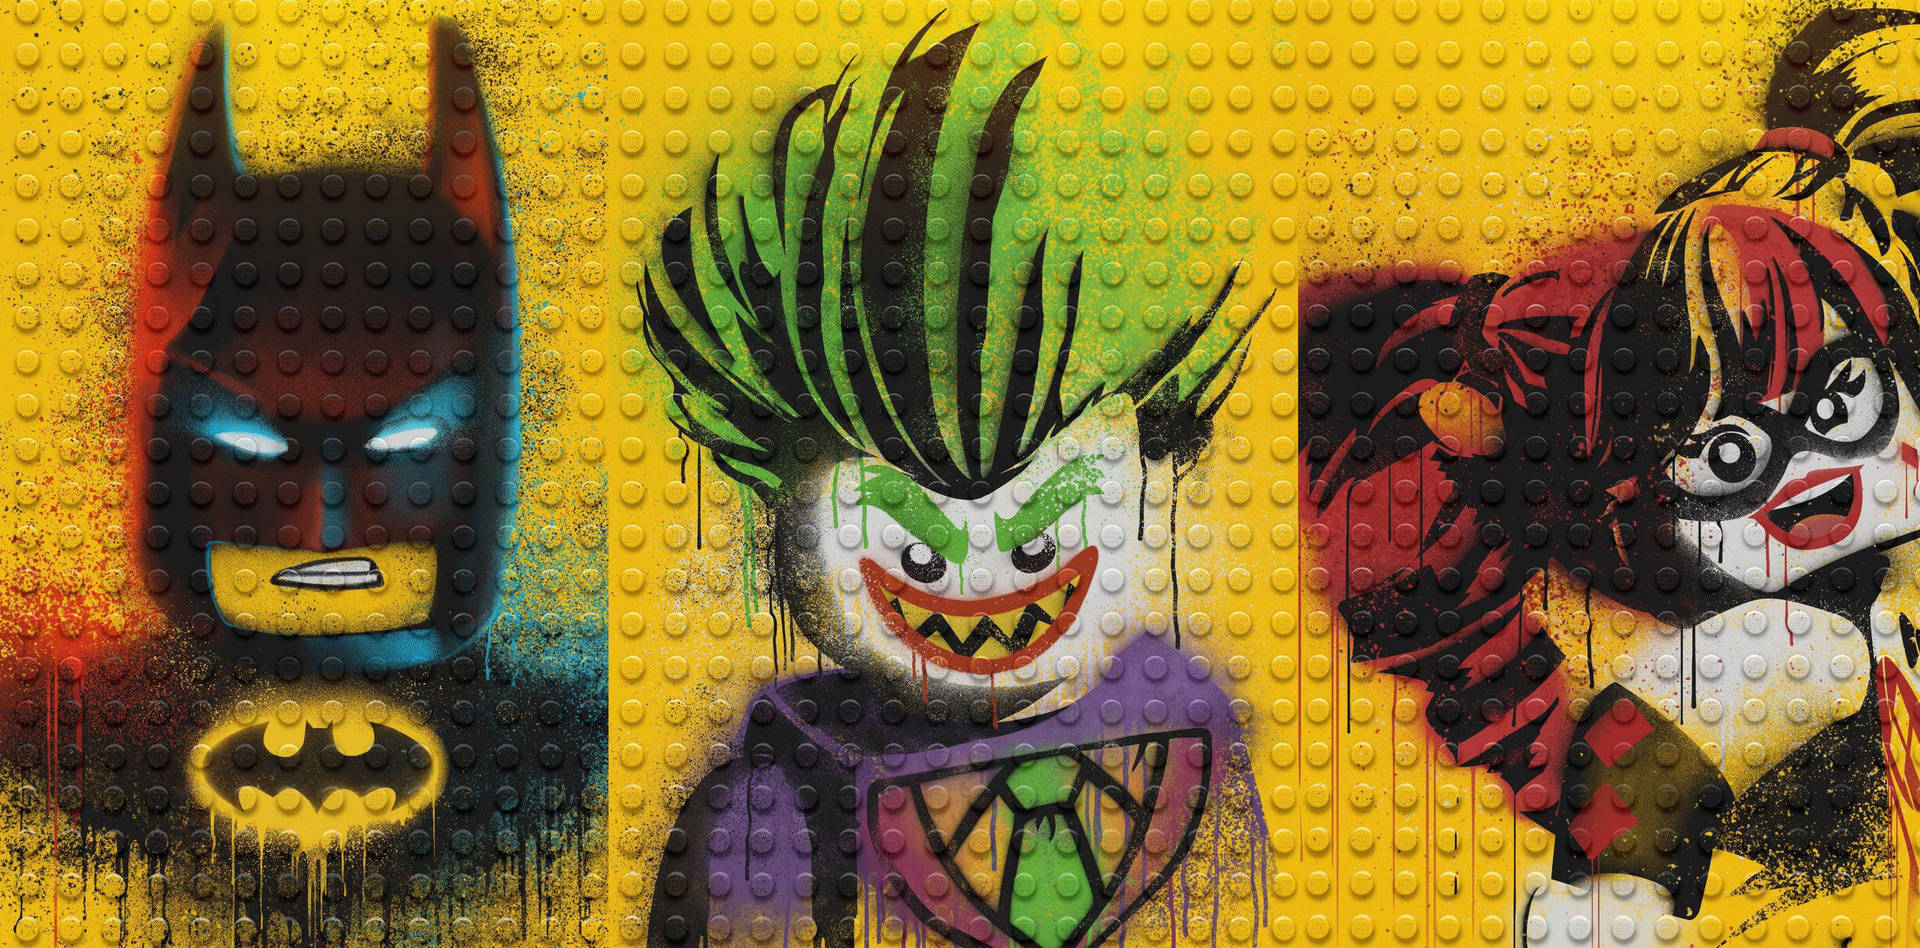 Lego Batman With Joker And Harley Quinn Wallpaper